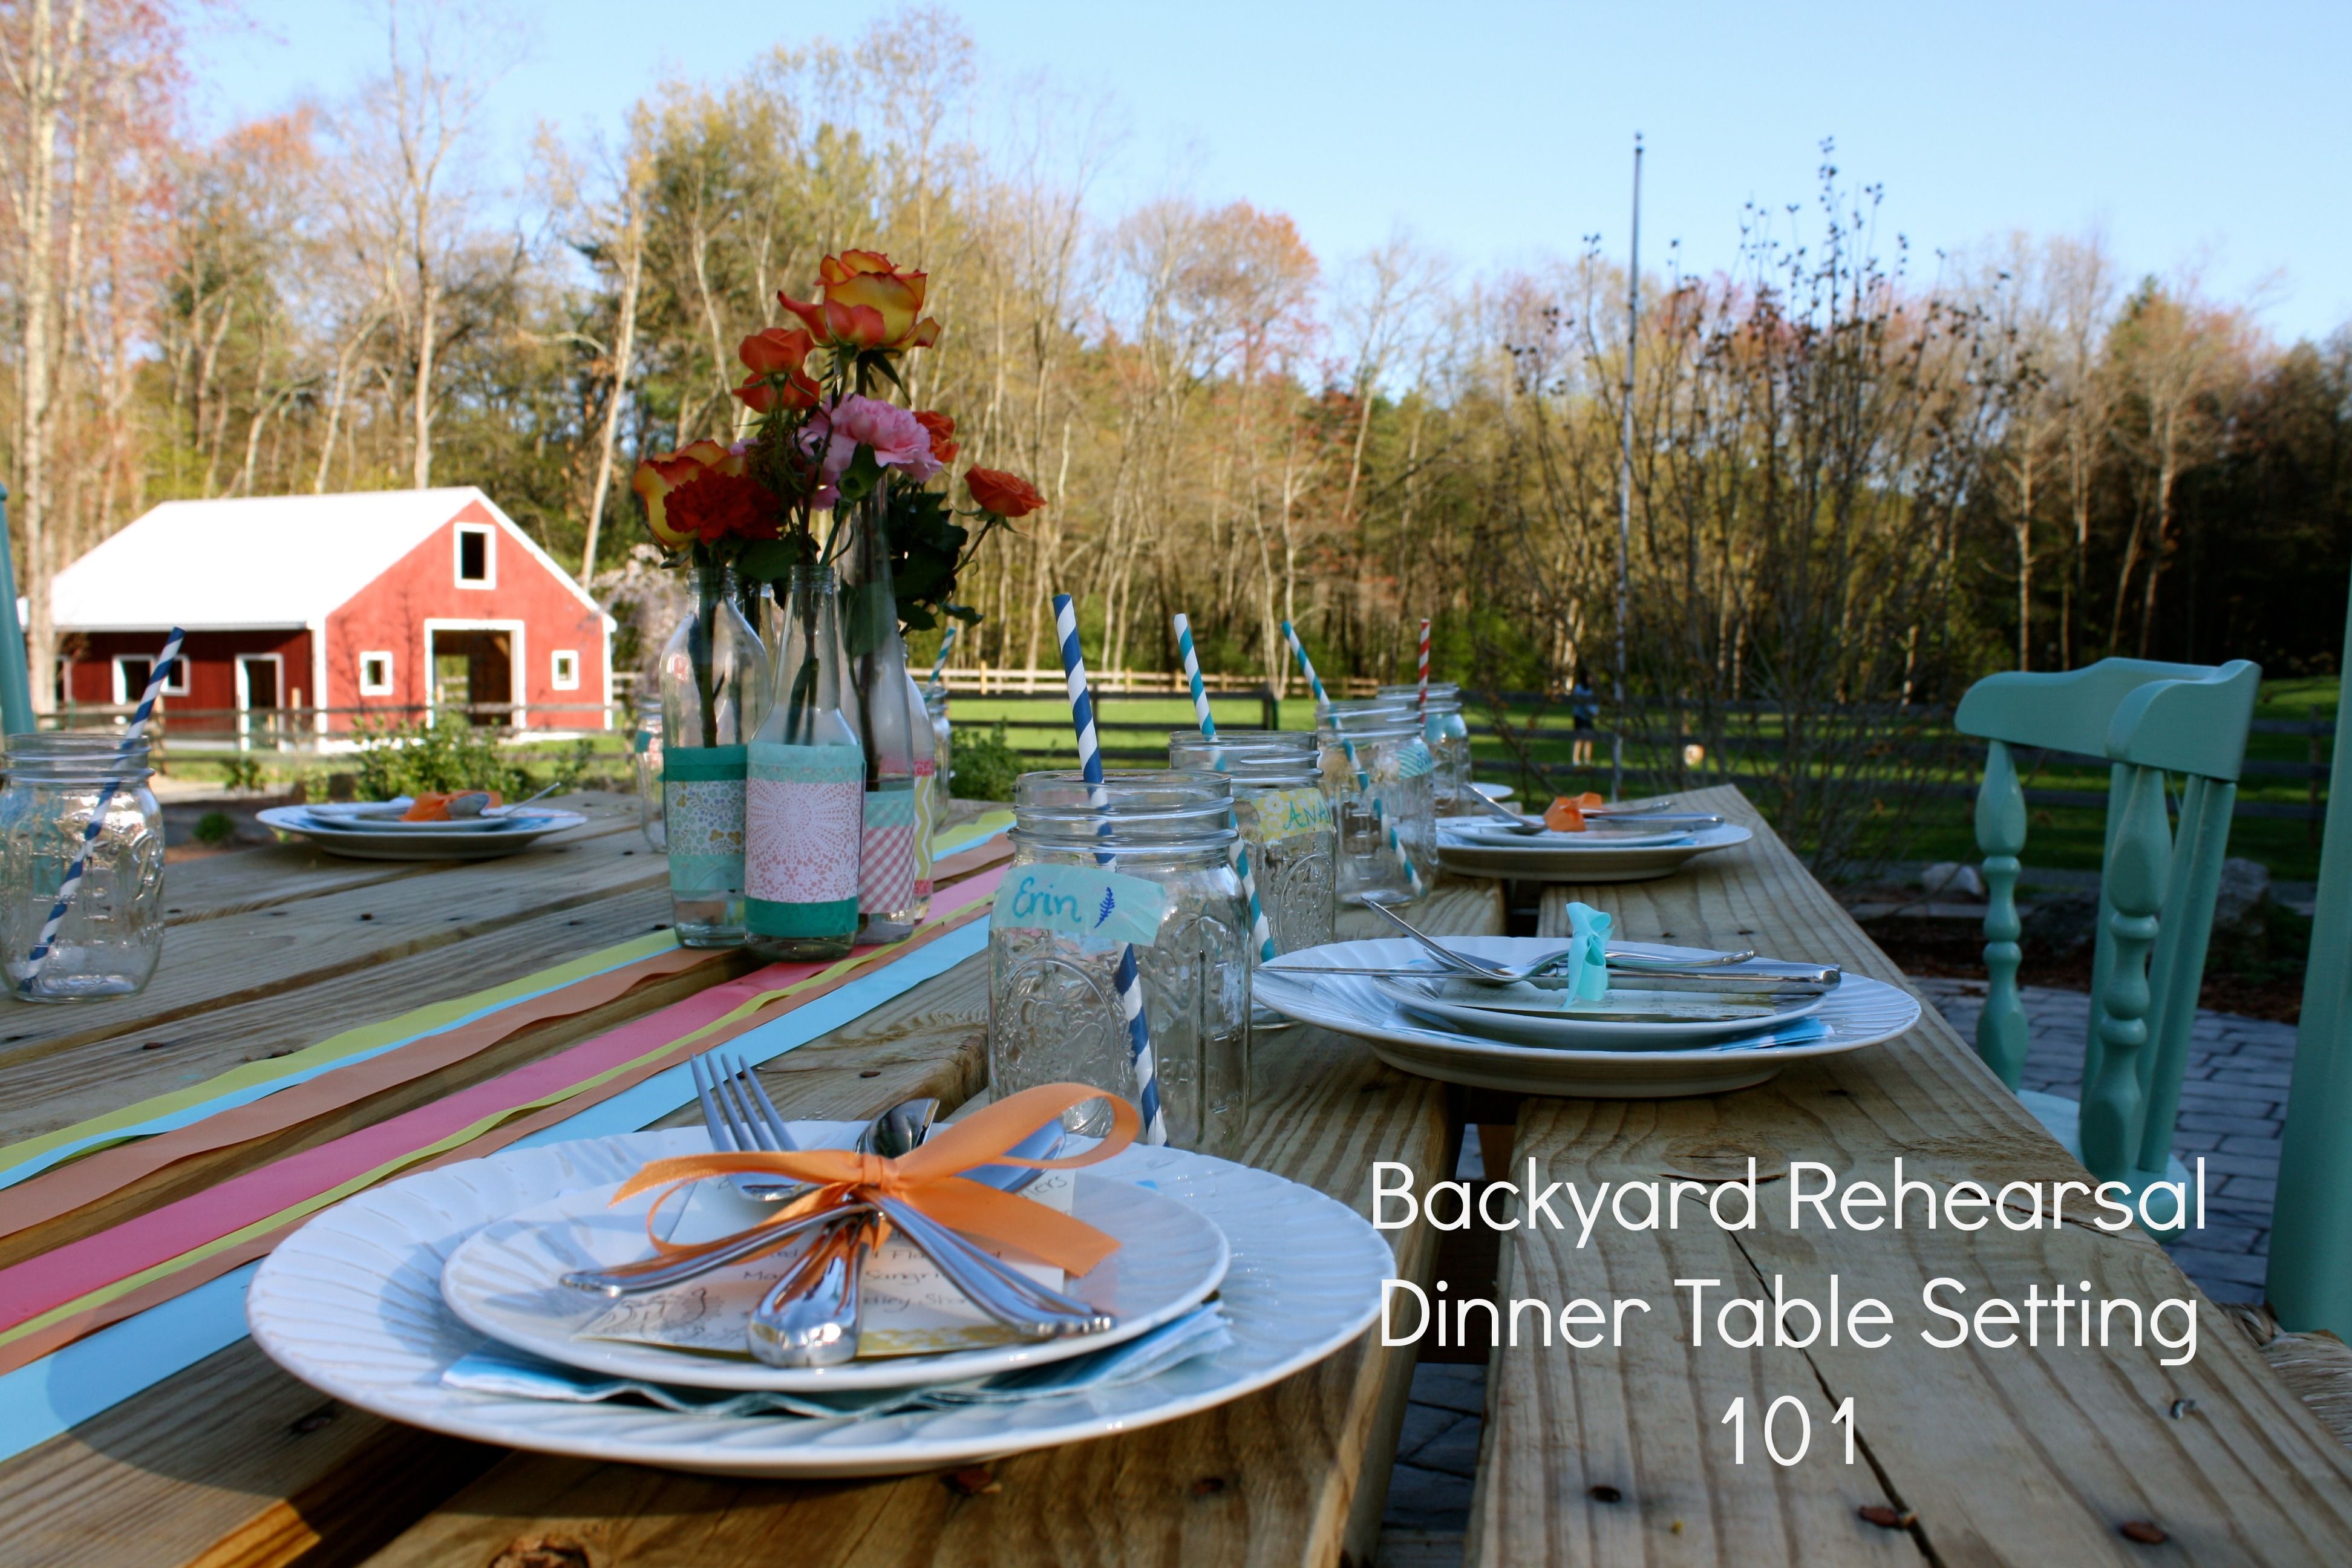 Backyard Rehearsal Dinner Table Setting 101 - Rustic Wedding Chic